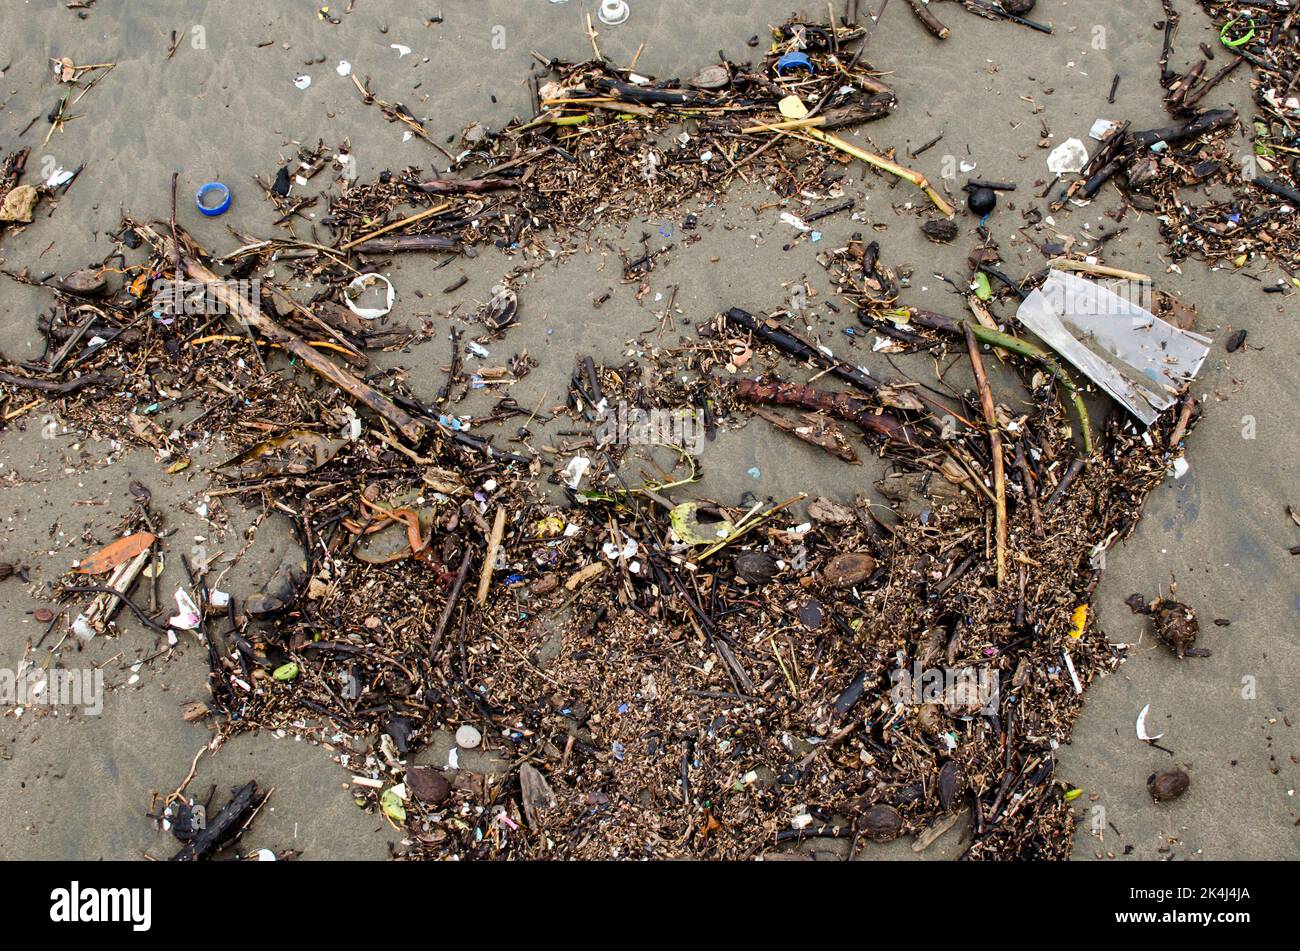 Plastic pollution on the beach Stock Photo